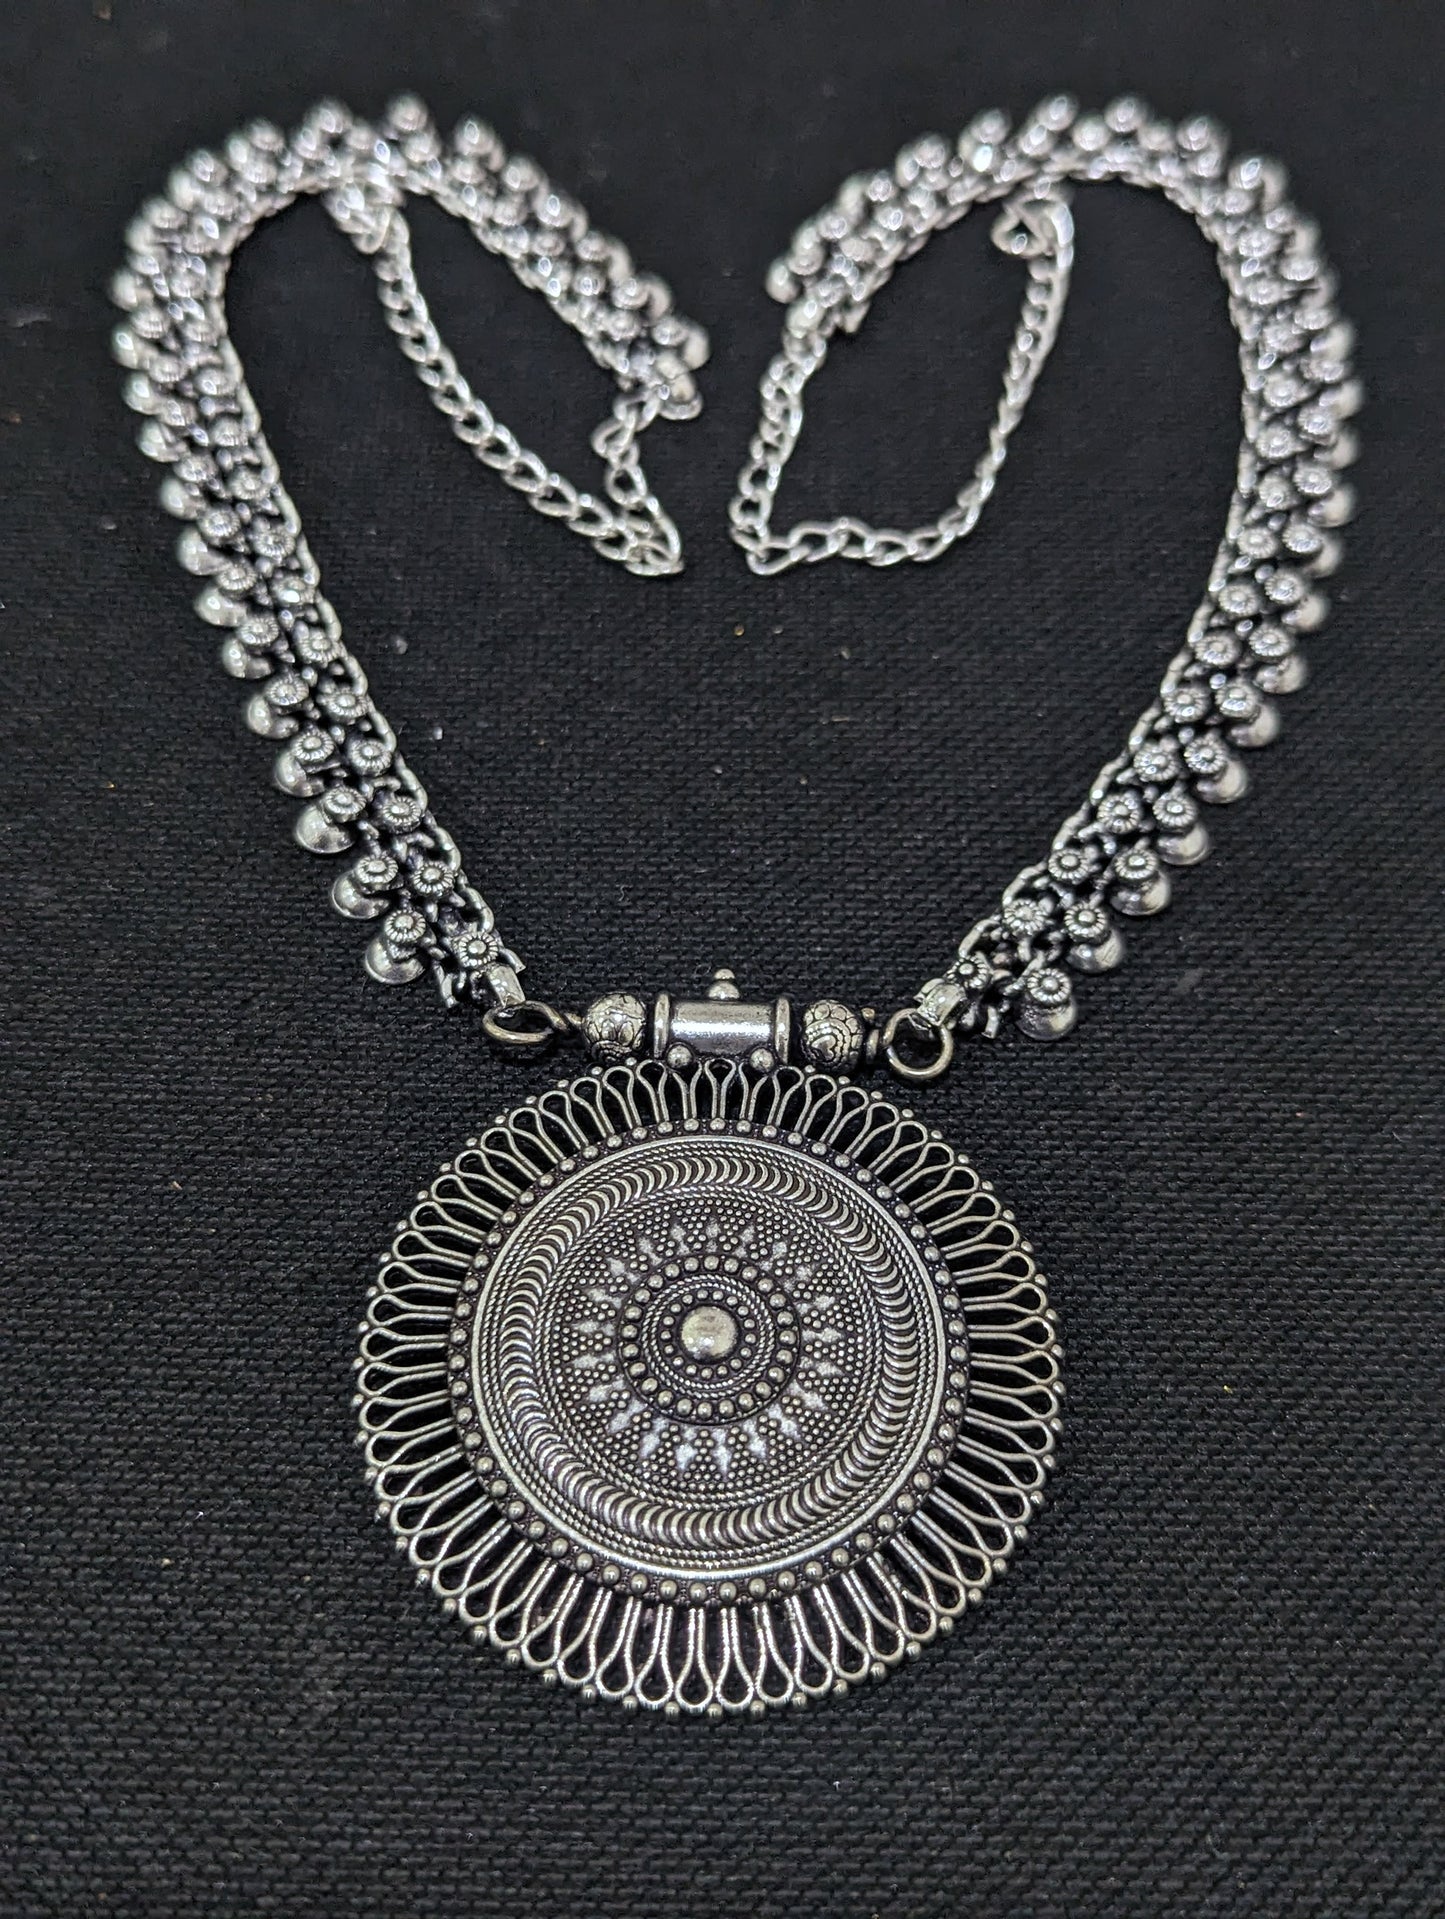 Oxidized Silver Long Chain Necklace - D3